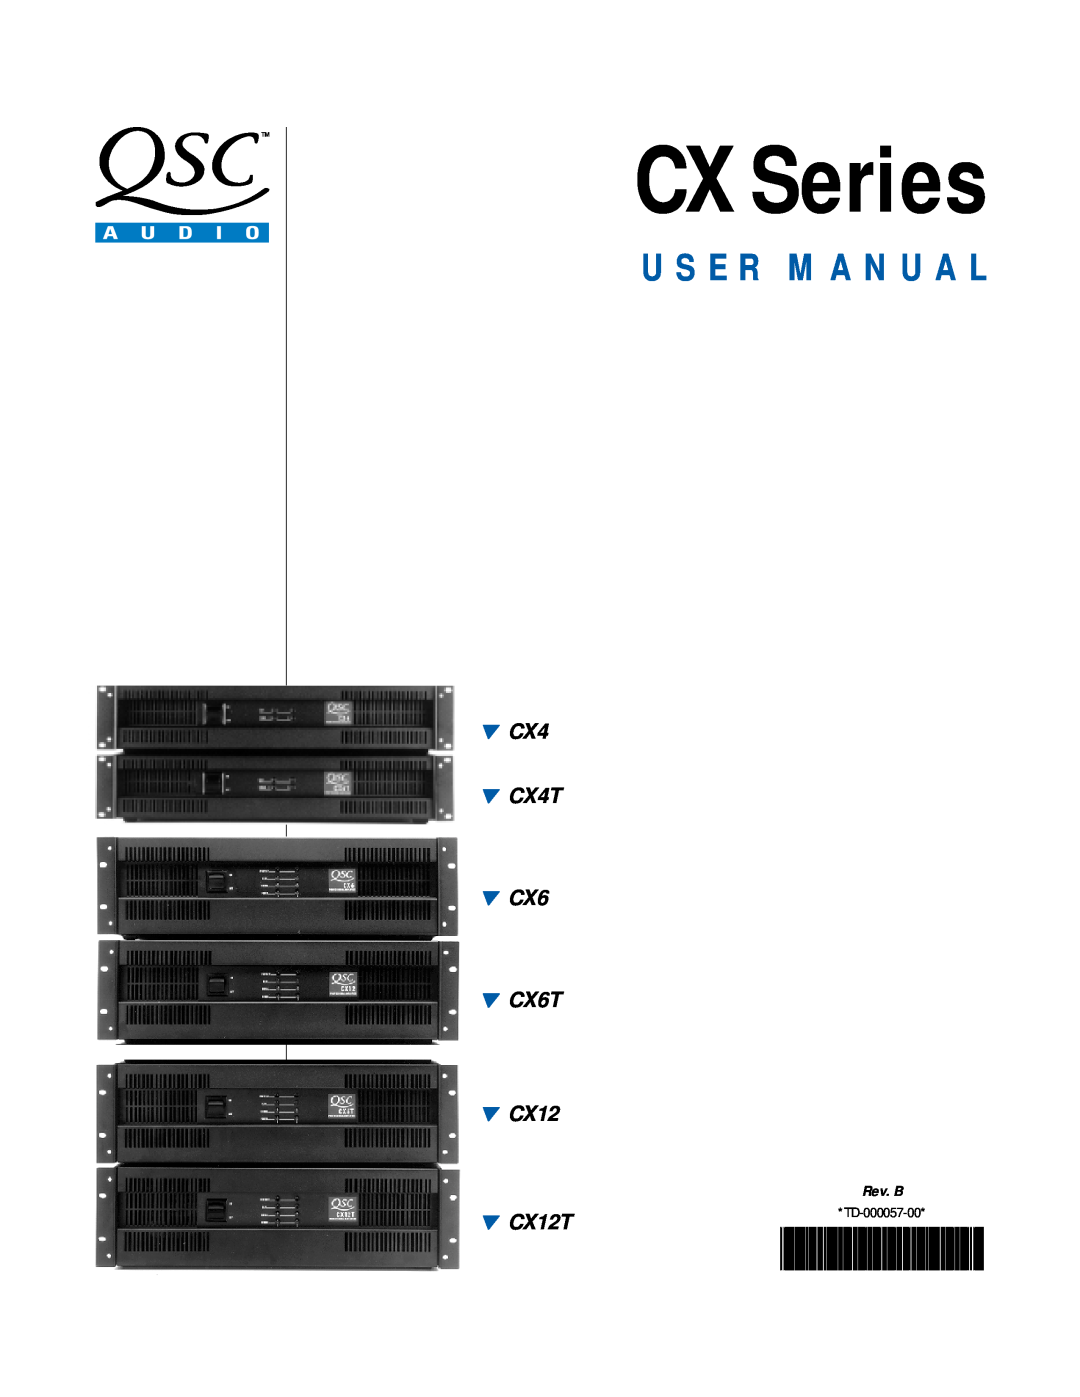 QSC Audio CX Series user manual CX4 CX4T CX6 CX6T CX12, CX12T, U S E R M A N U A L, TD-000057-00, Rev. B 